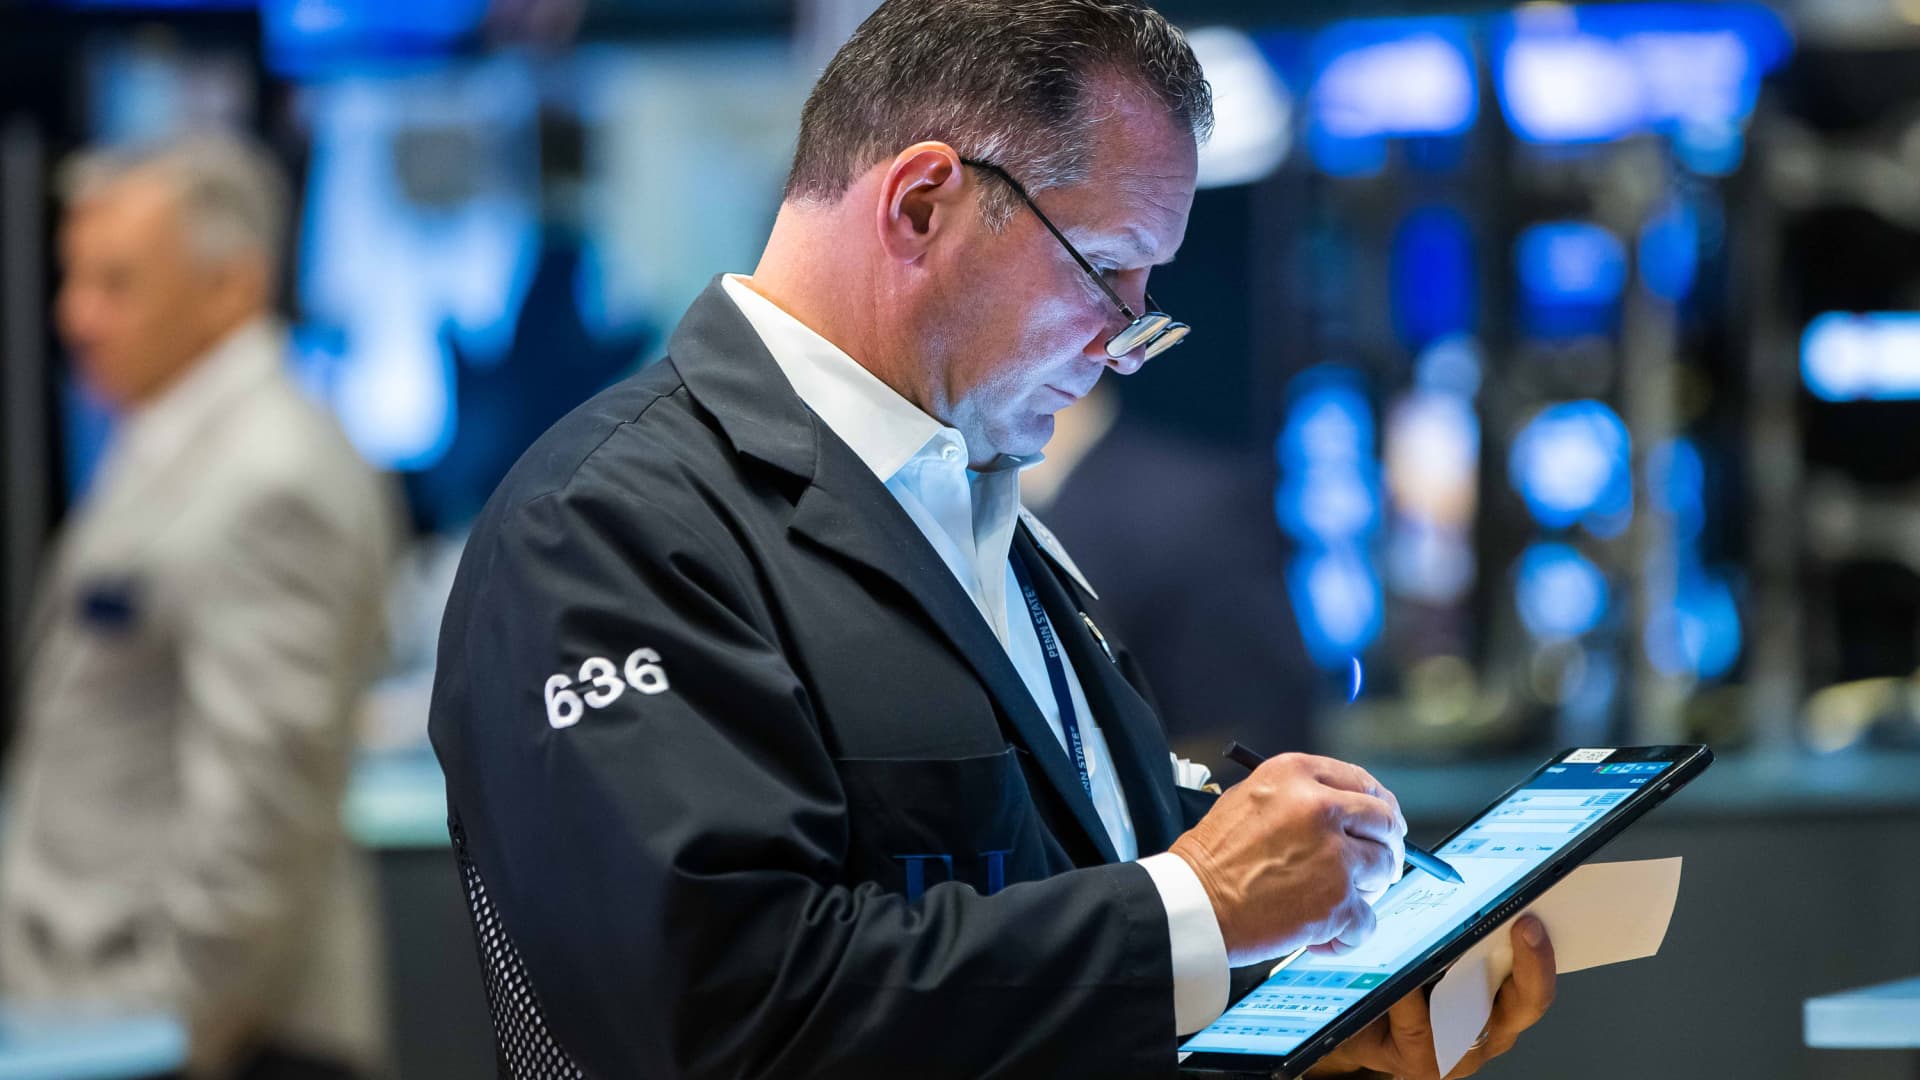 Stock futures fall as Wall Street looks ahead to Jackson Hole